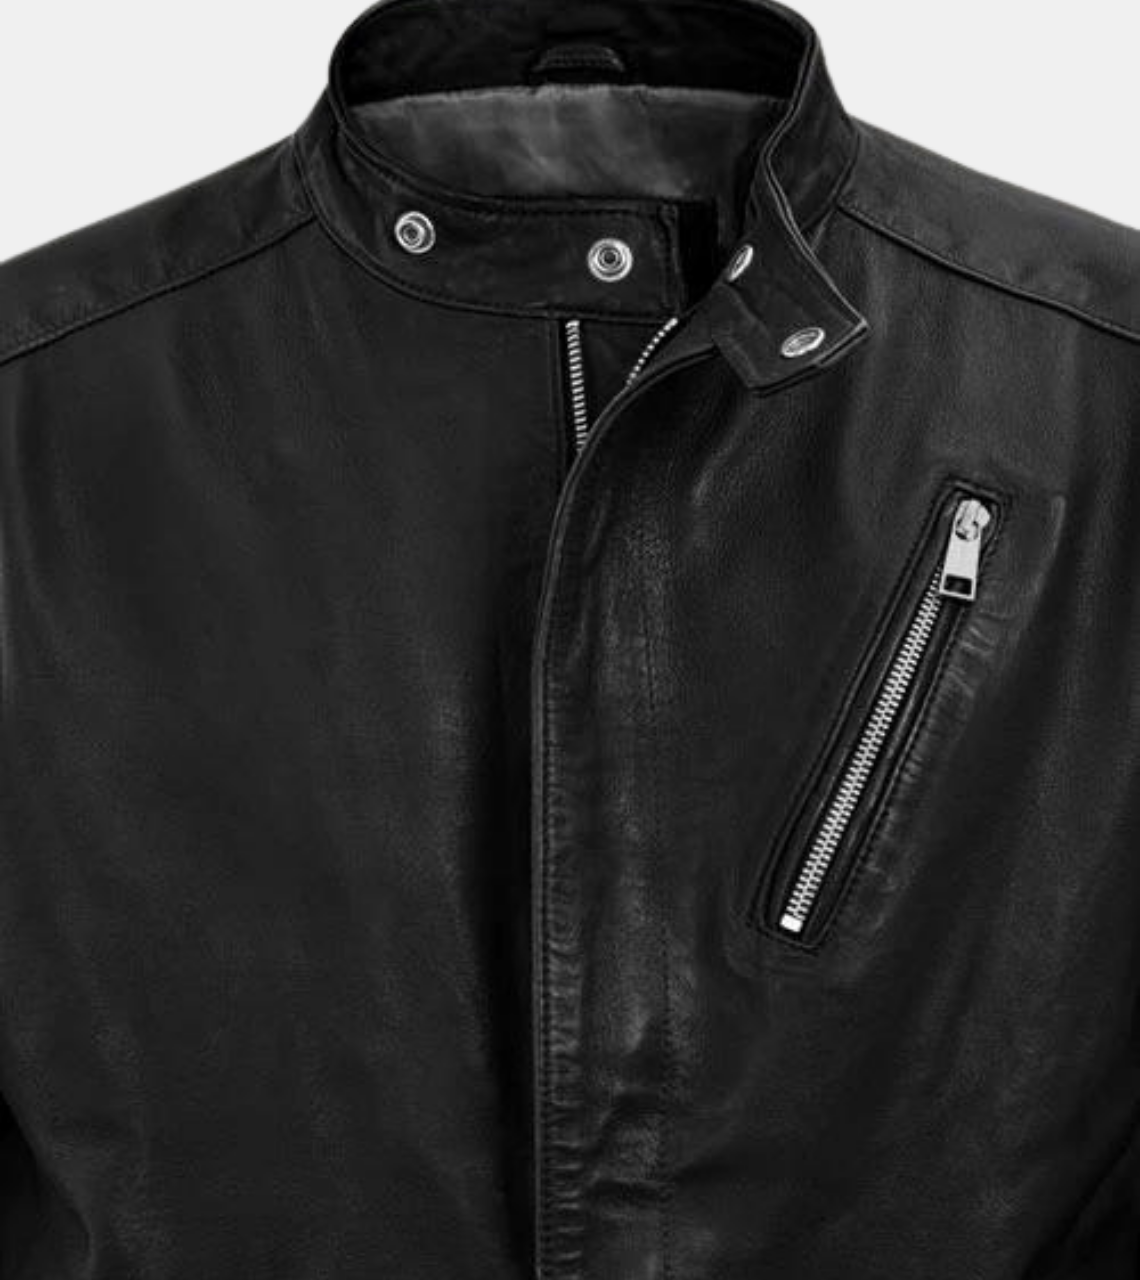 Gespare Men's Black Biker's Leather Jacket Zipper